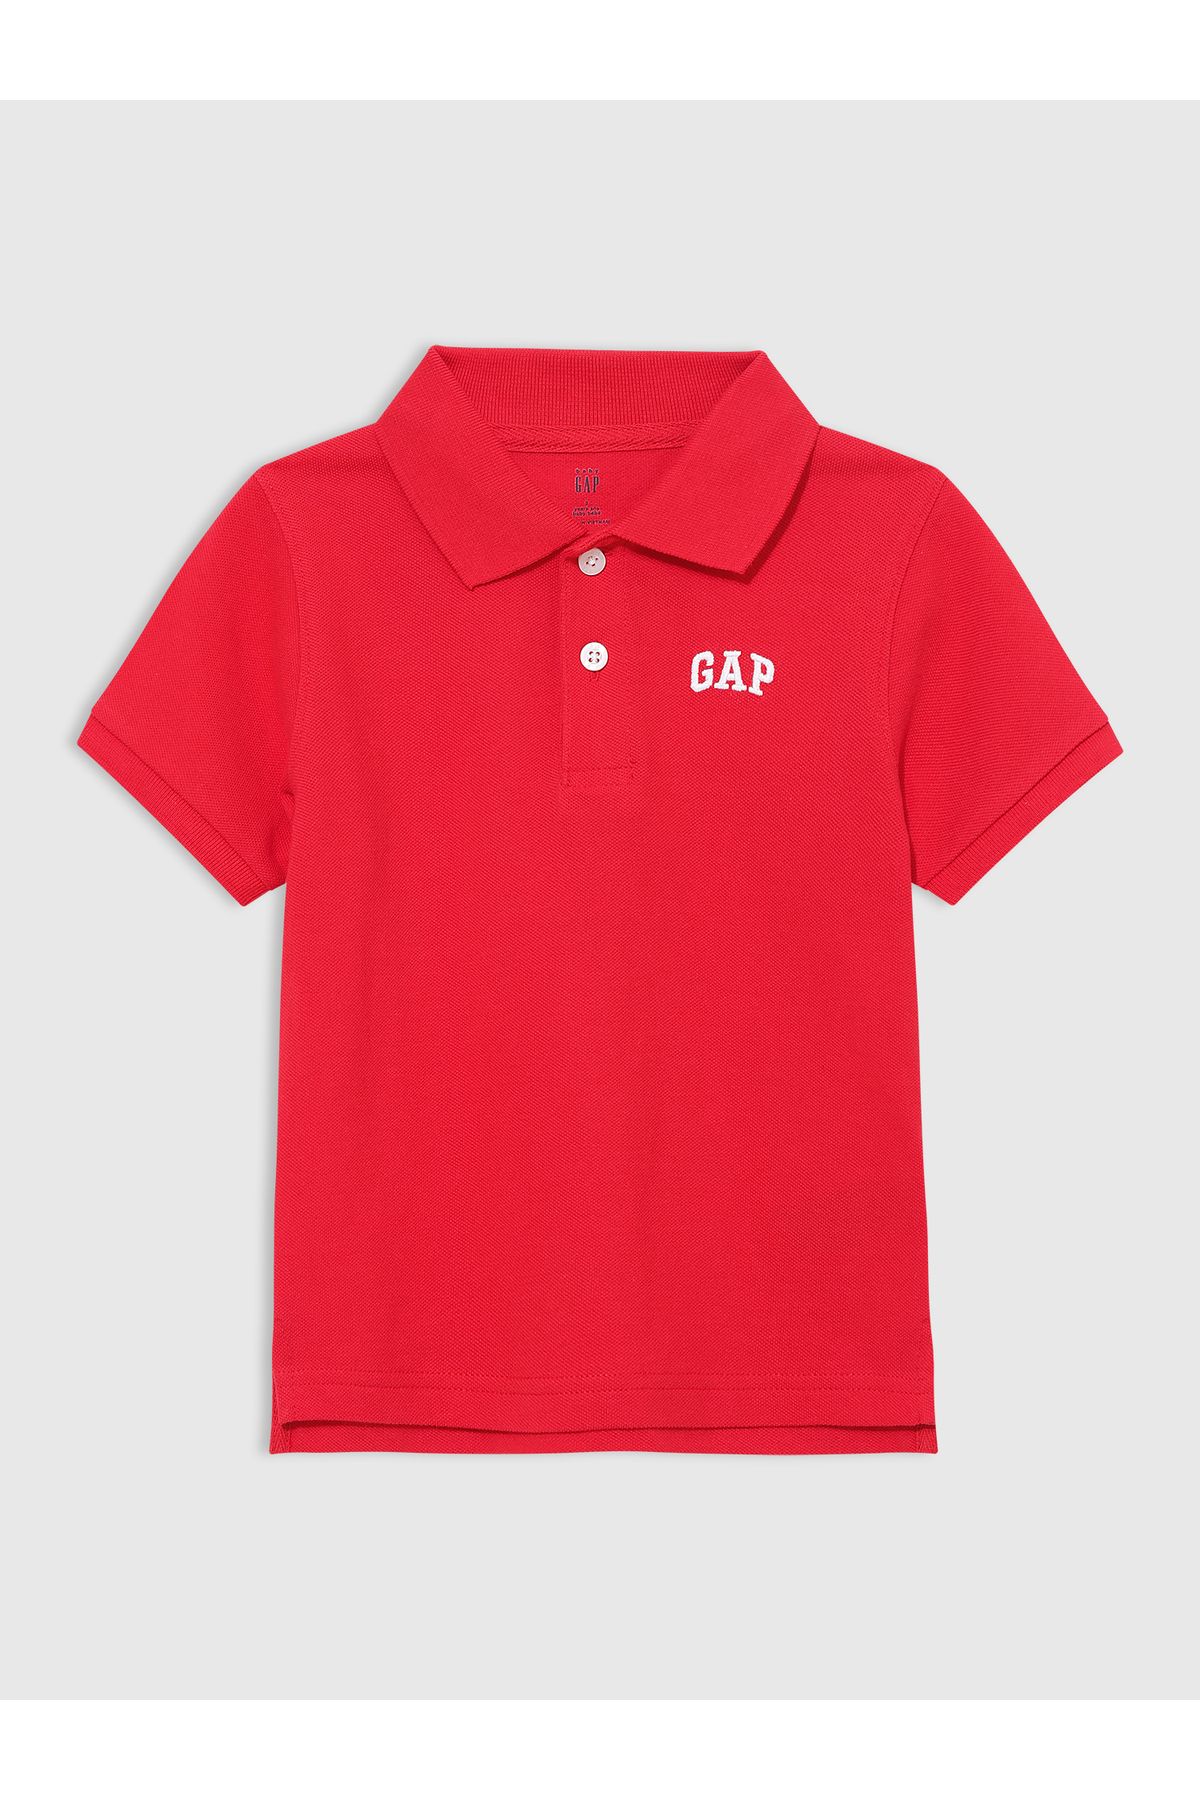 GAP Erkek Bebek Kırmızı Gap Logo Polo Yaka T-shirt